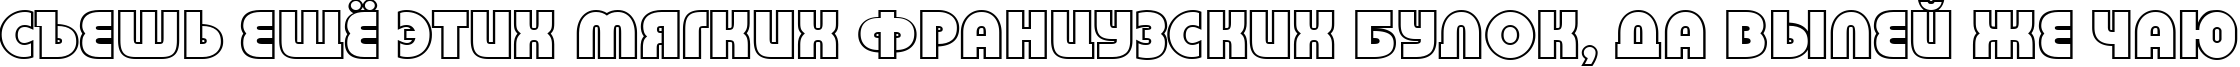 Пример написания шрифтом a_BighausTitulOtl текста на русском